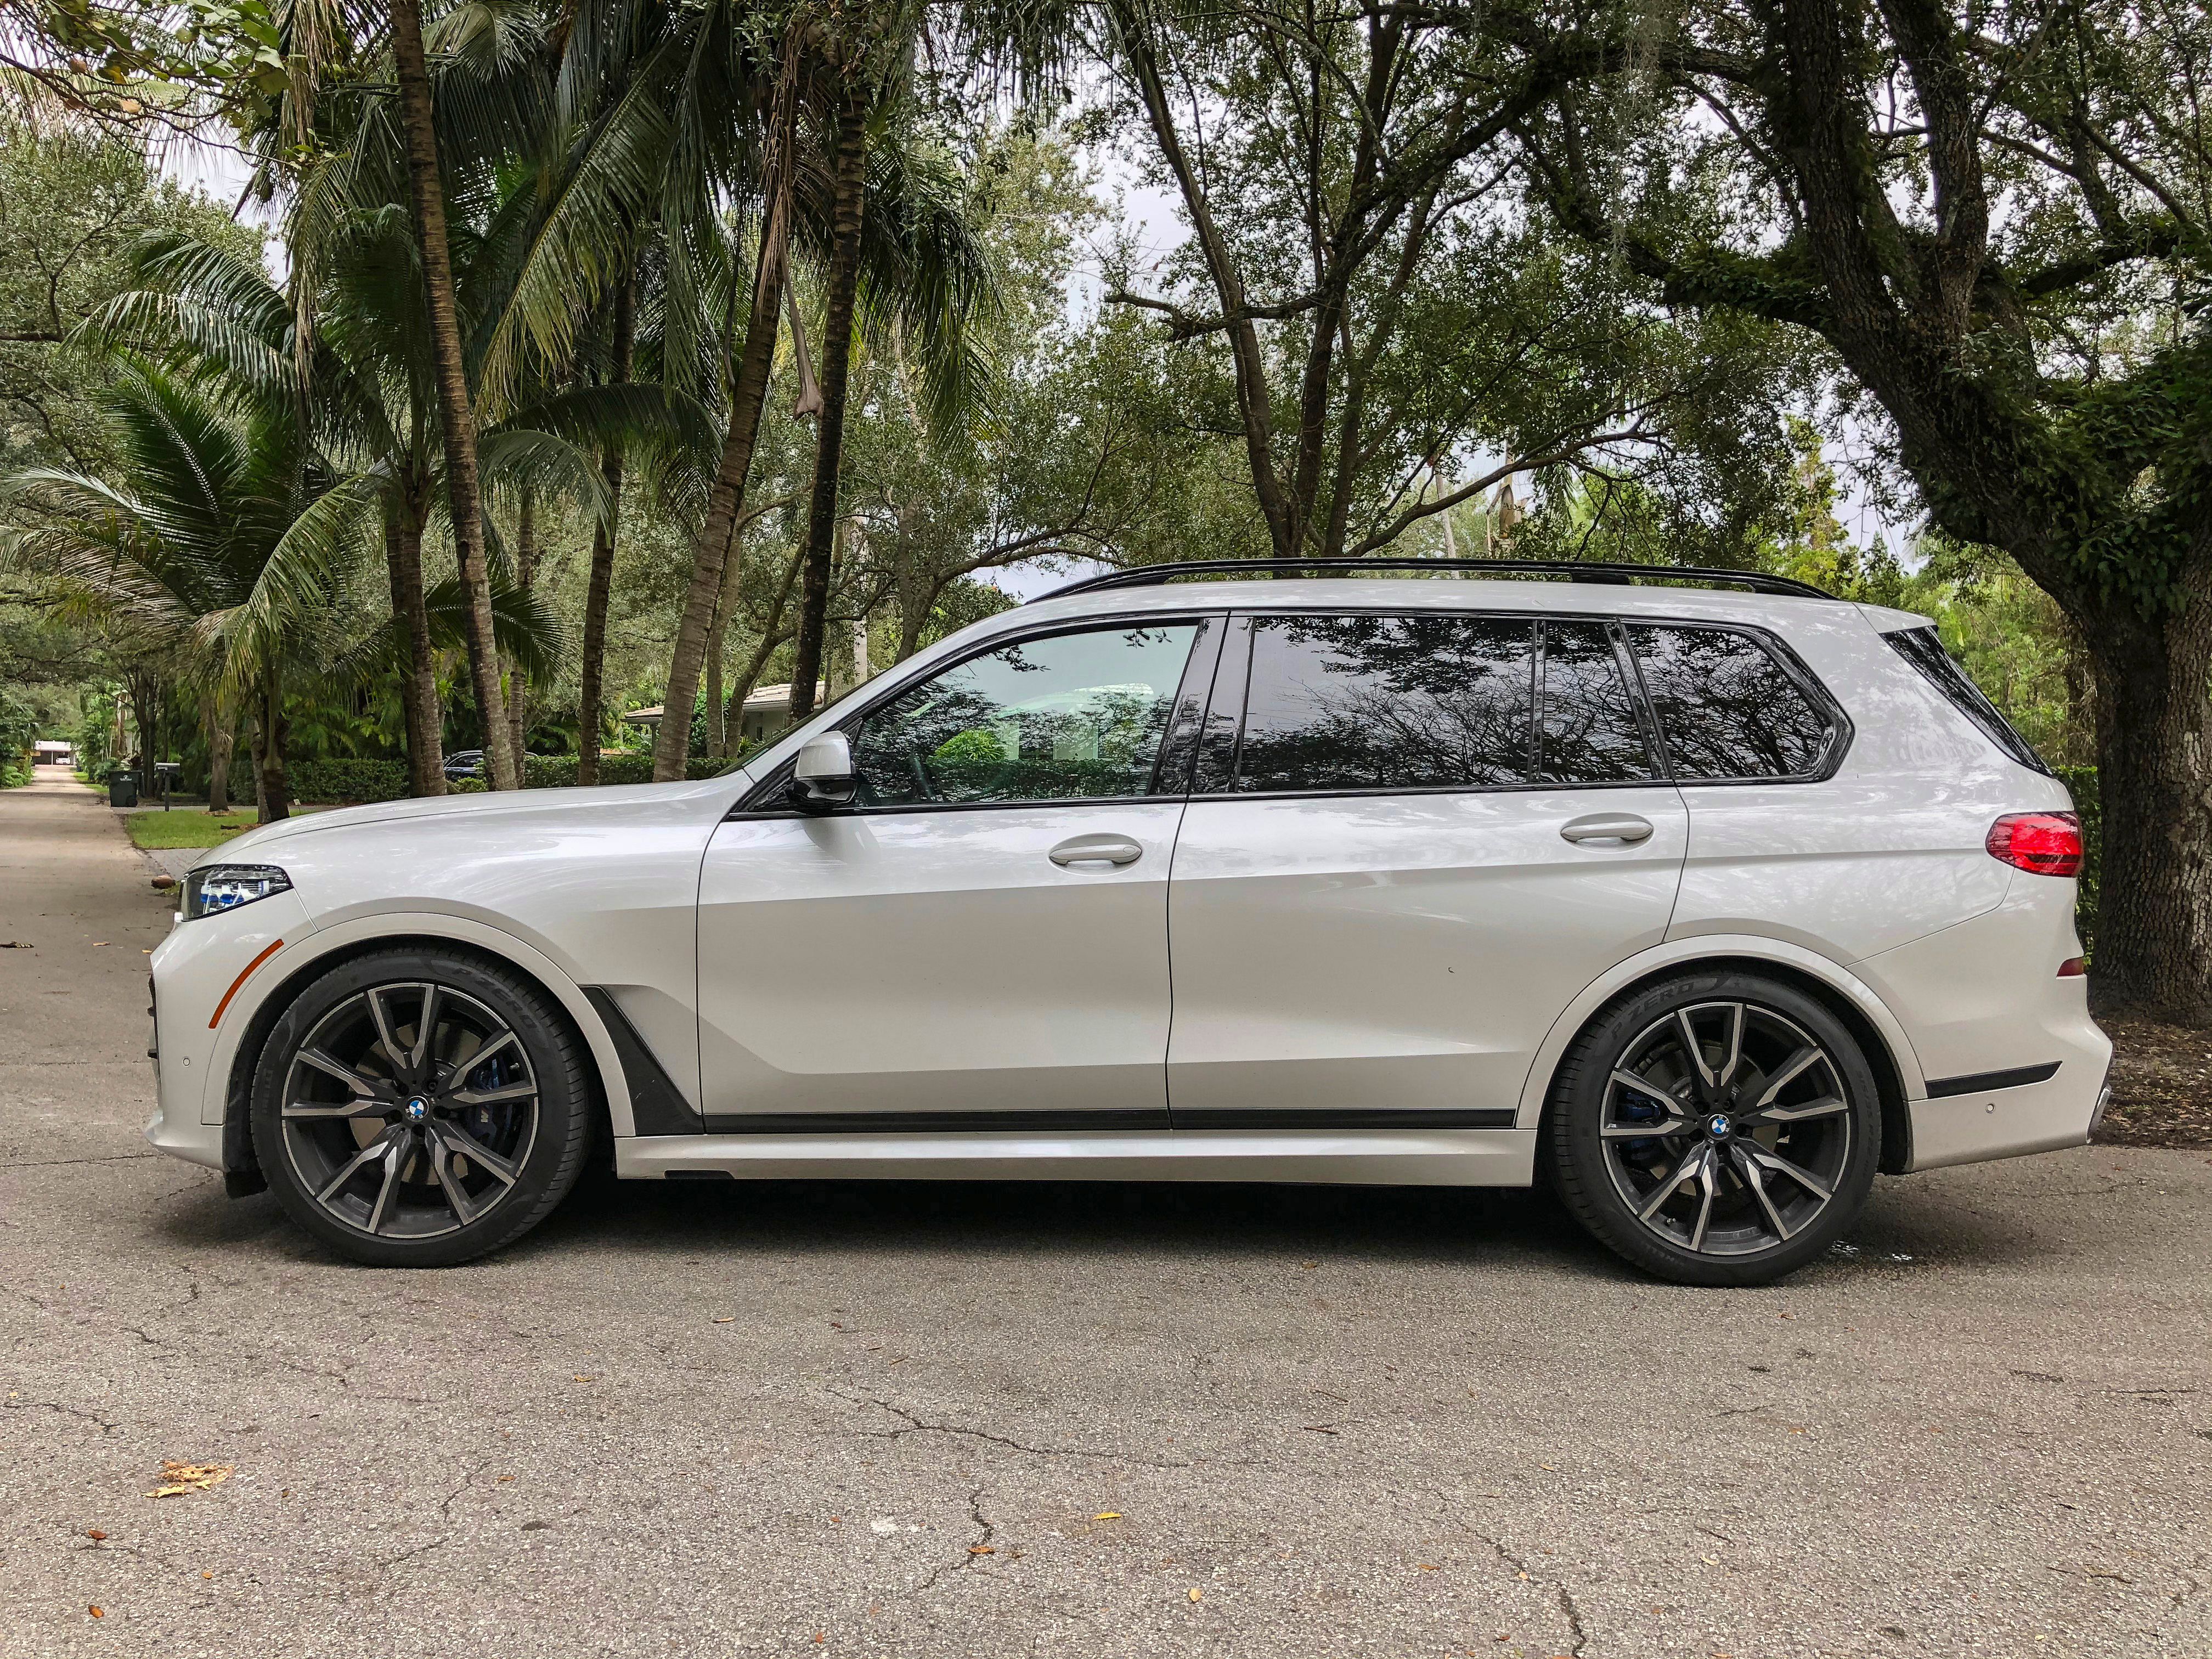 2020 BMW X7 - Driven